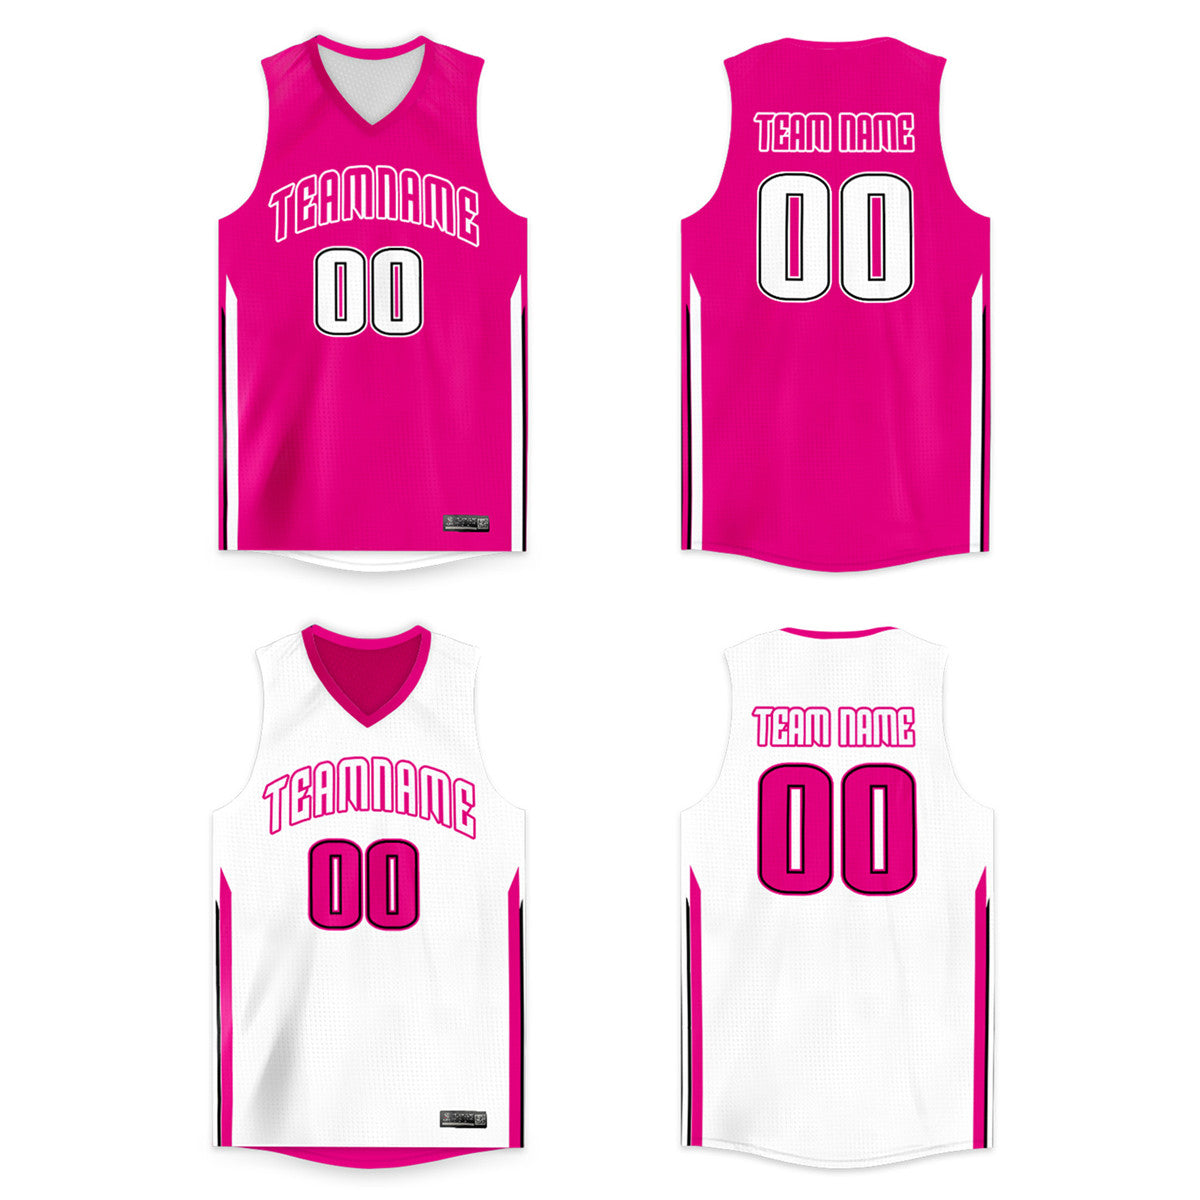 Sprinklecart Men New Custom Design Football Jersey - White Pink Mix Pattern